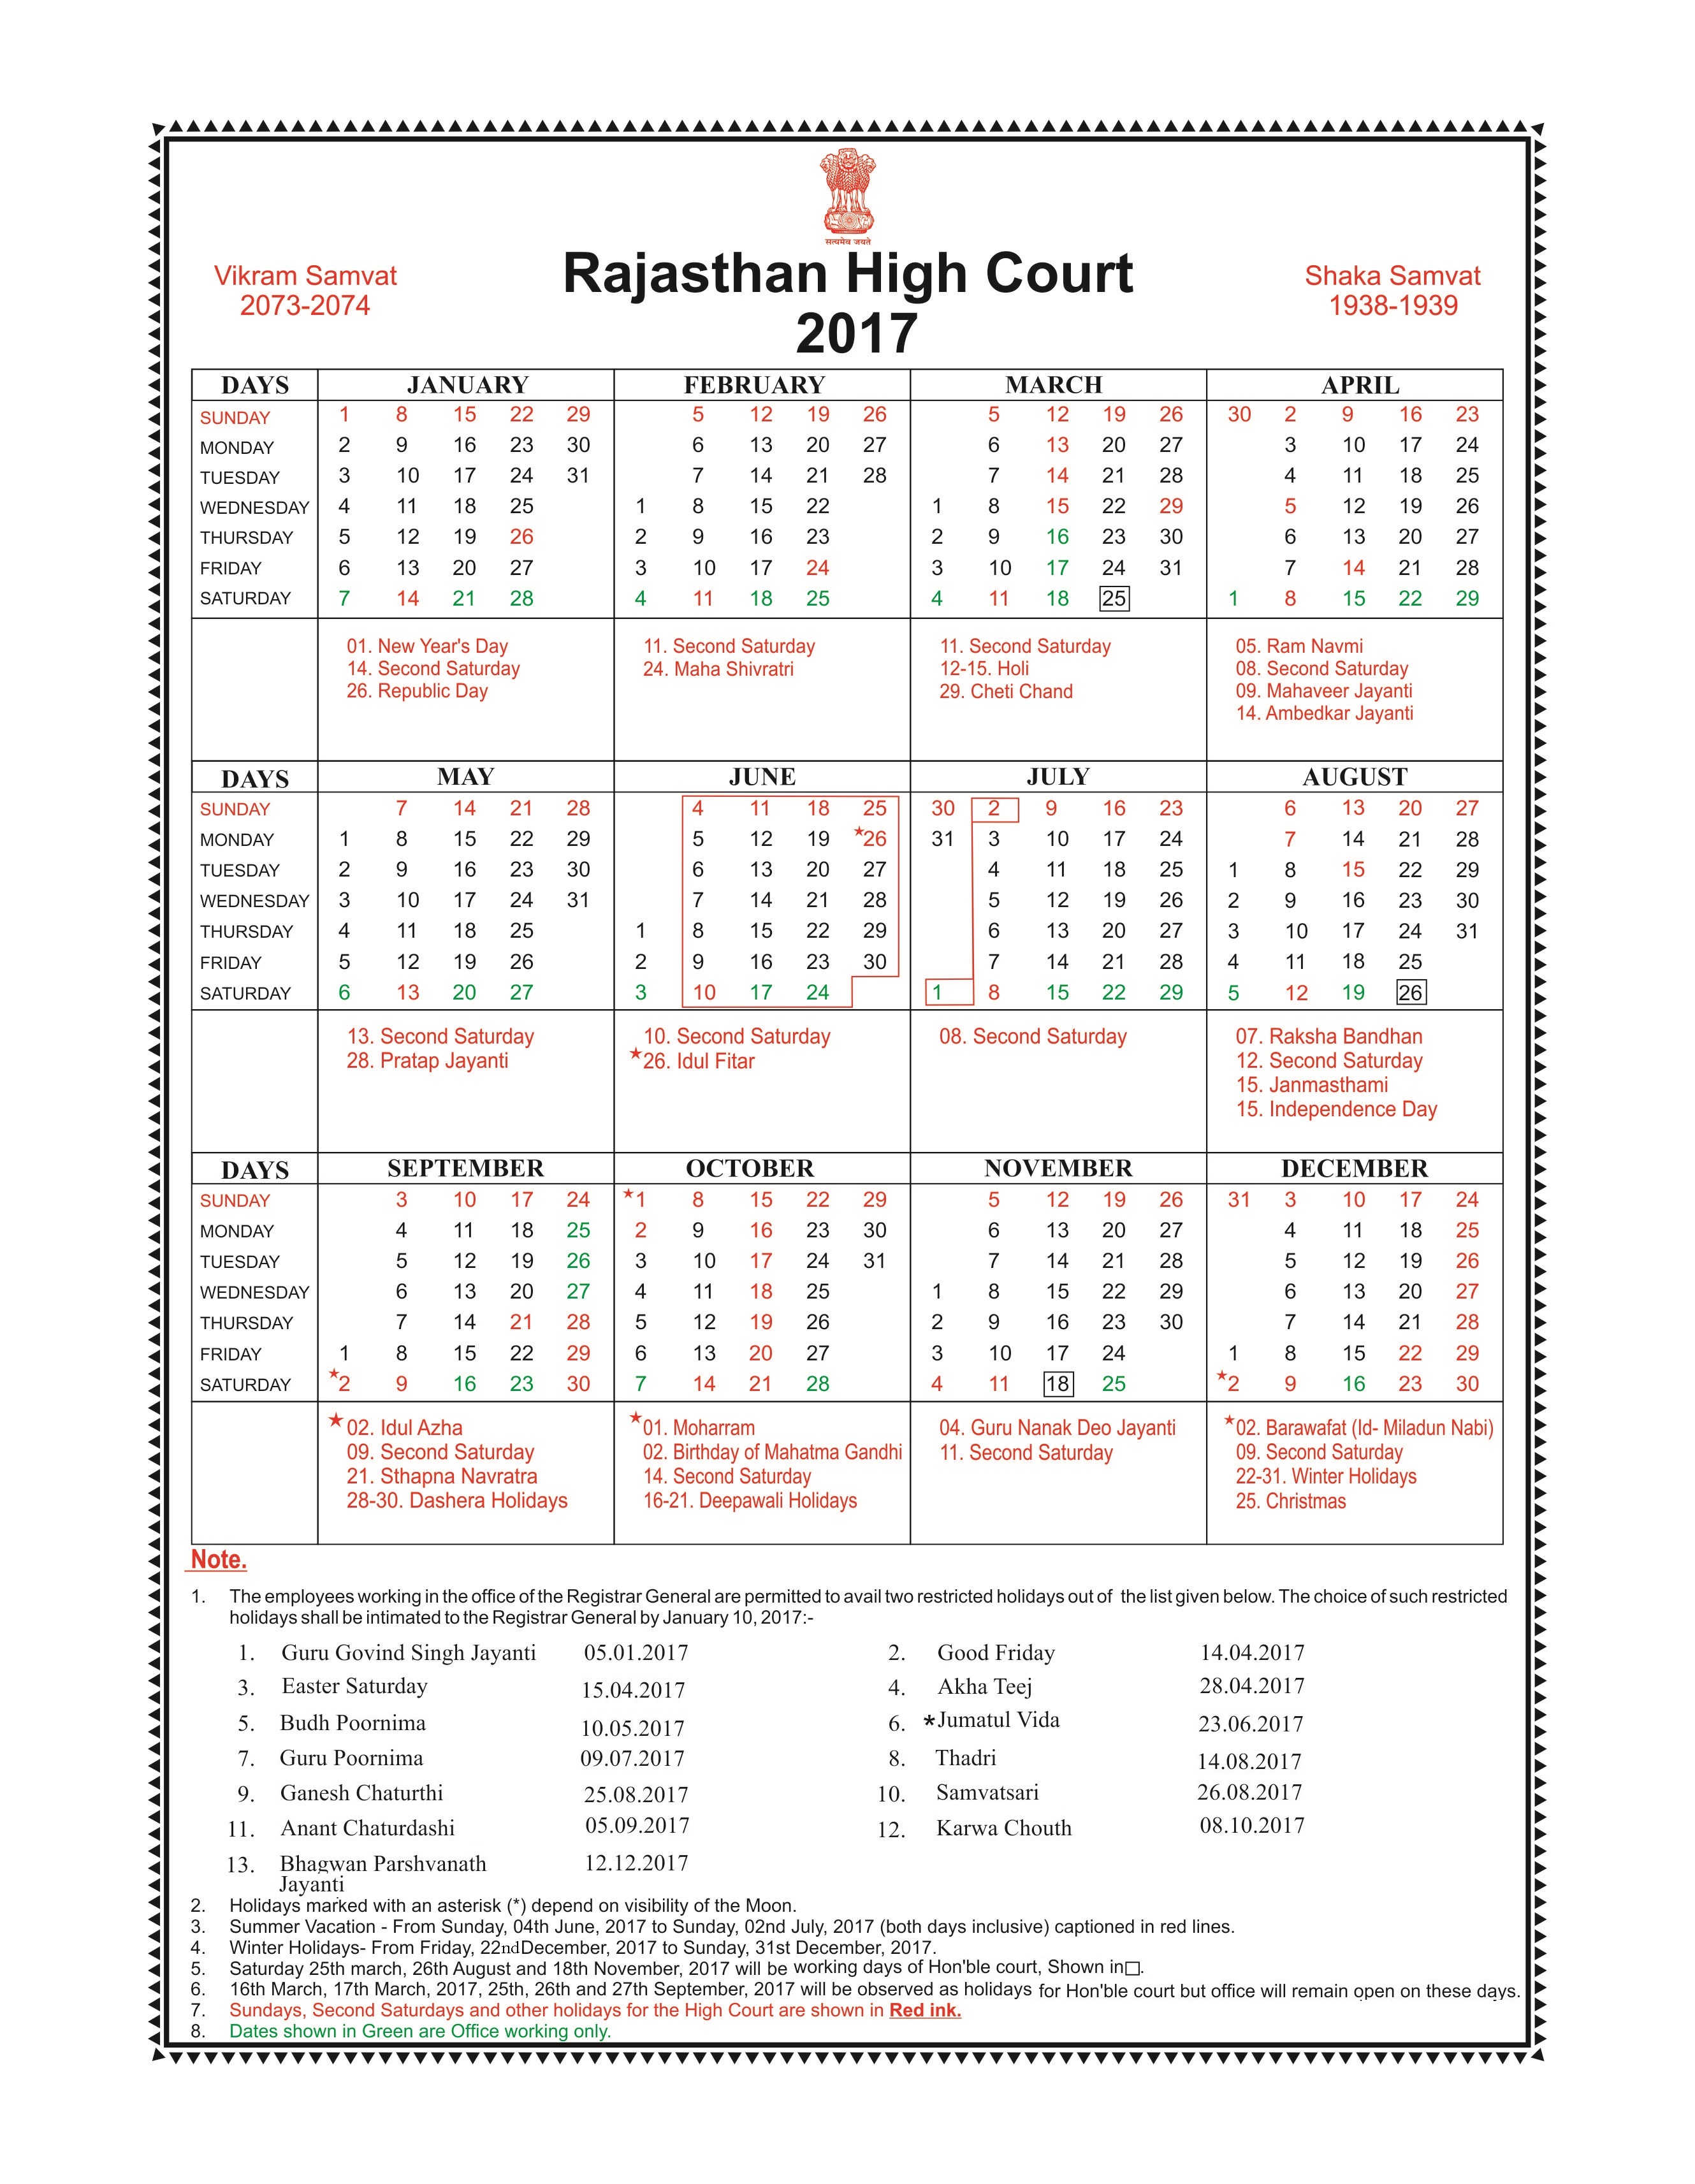 Rajasthan High Court Calendar 2017